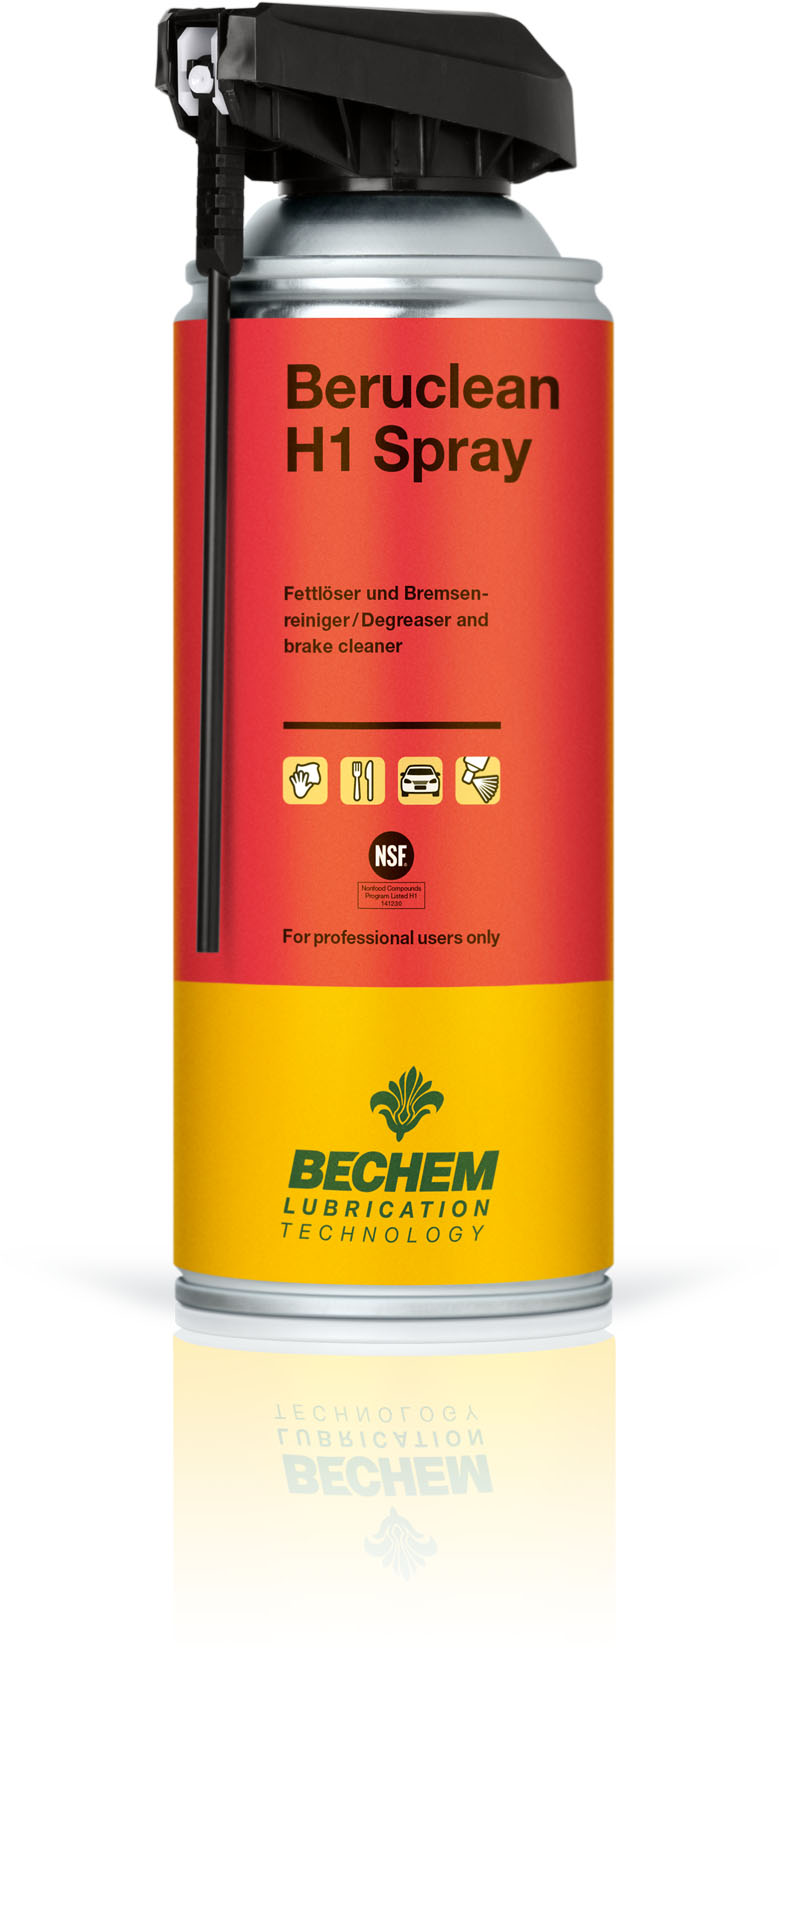 400 ml spray can of Beruclean H1 Spray